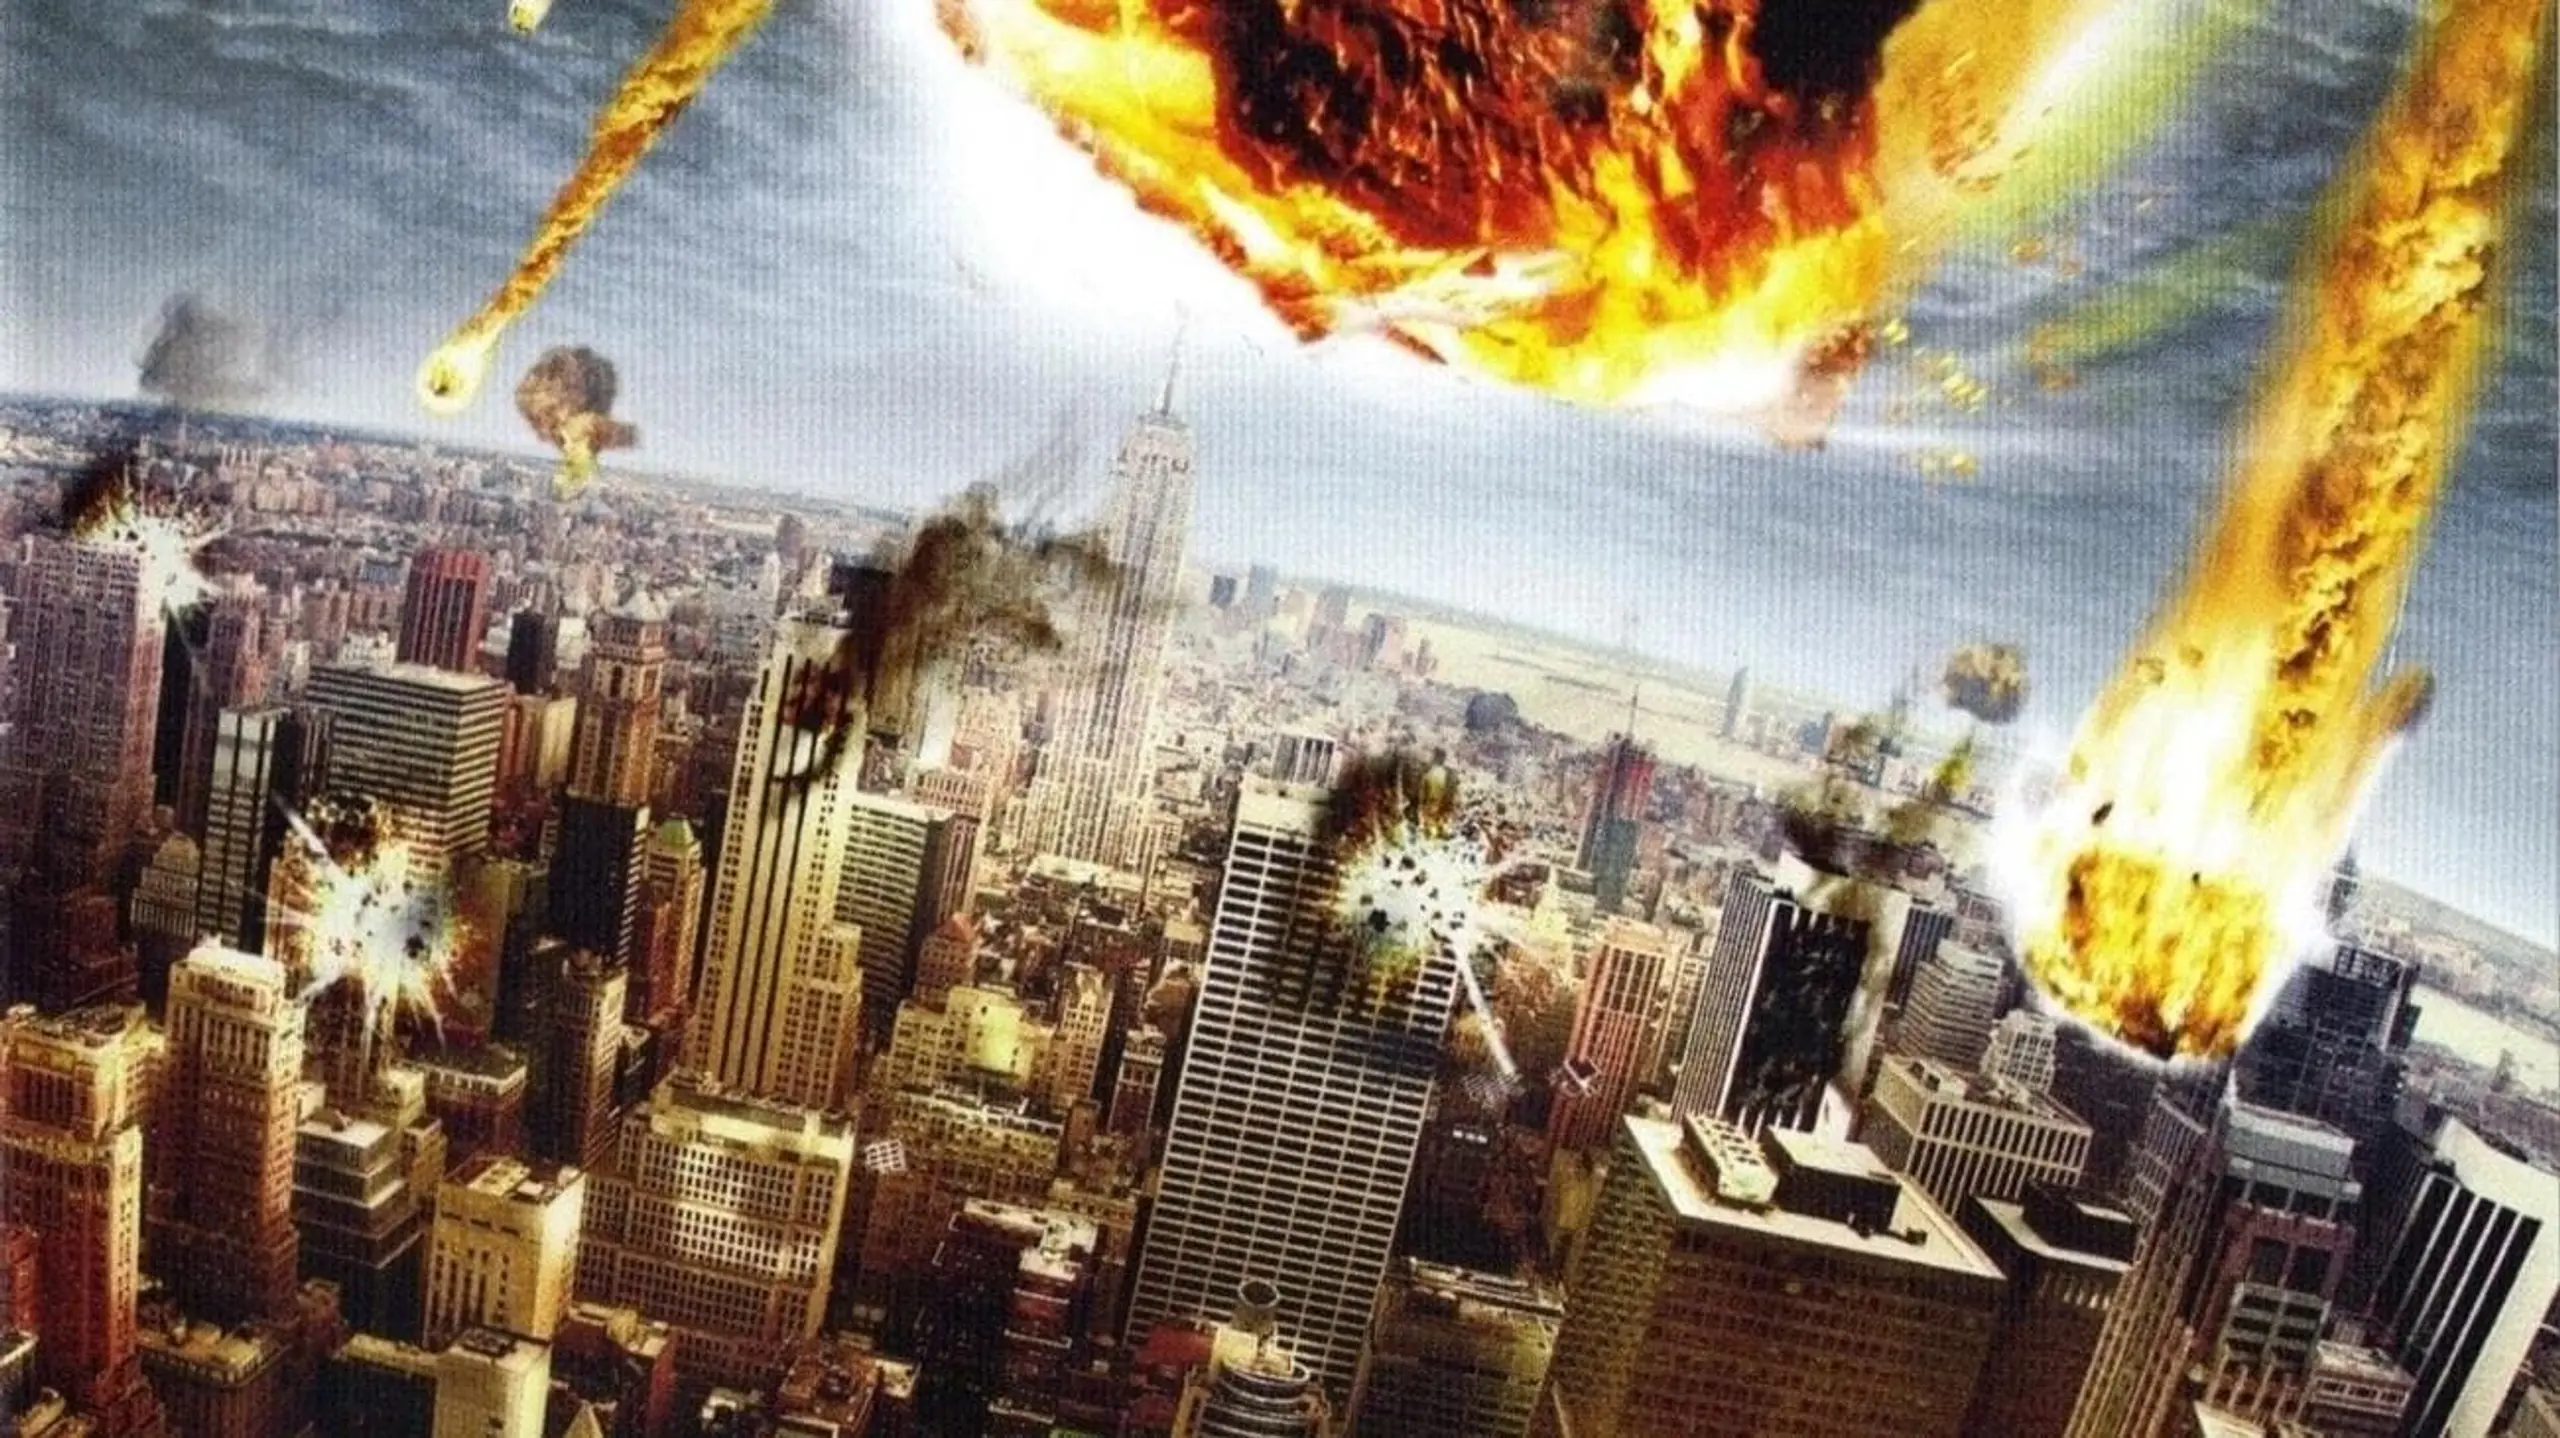 Meteoriten – Apokalypse aus dem All